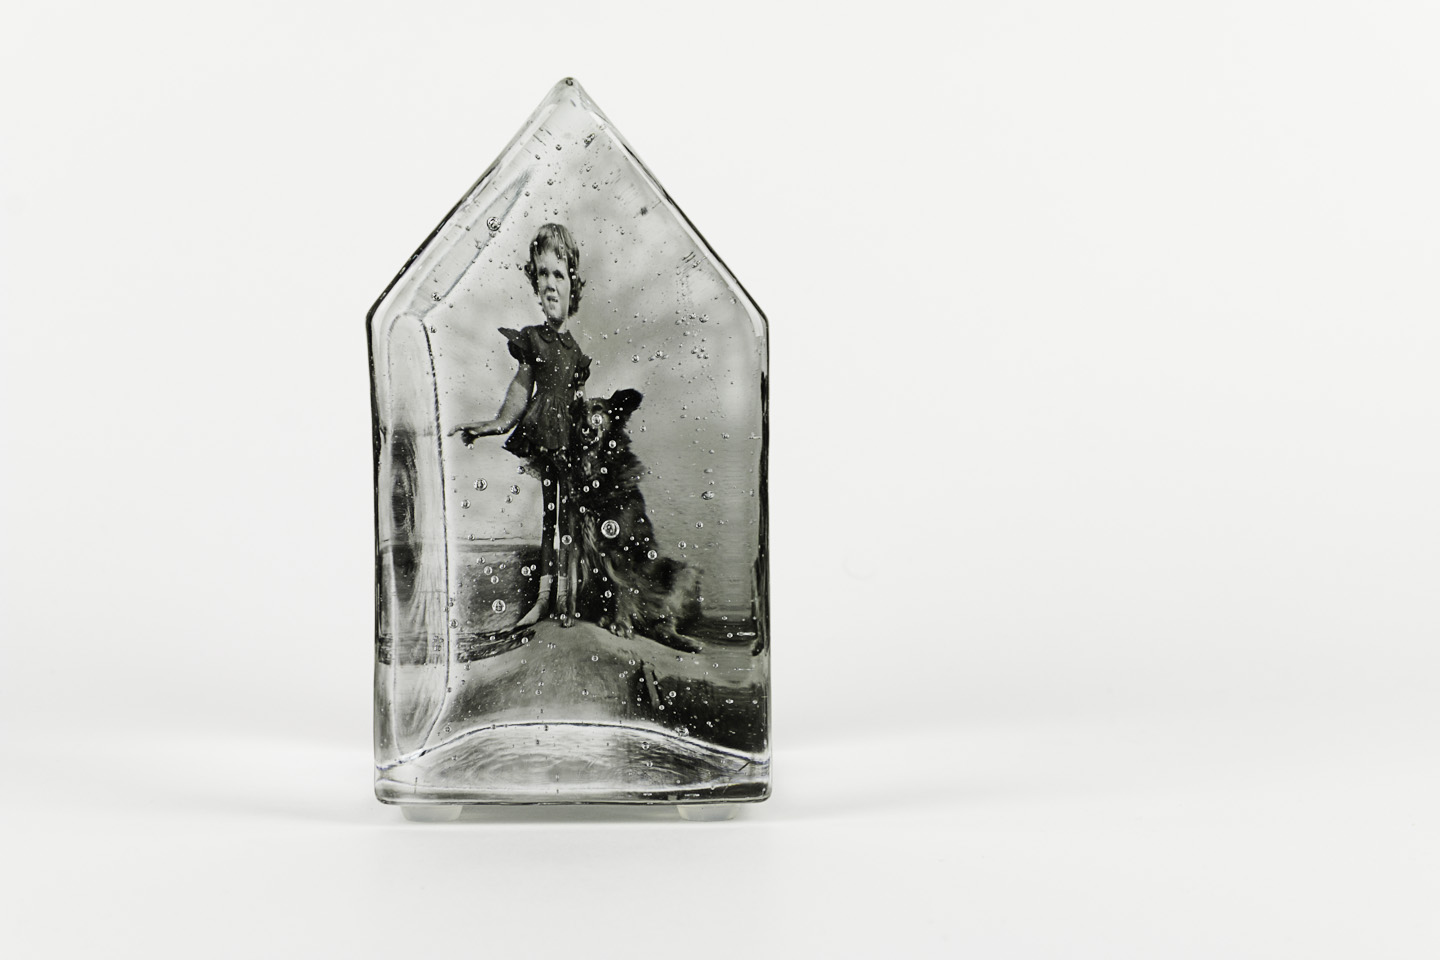  Teresa Batty  How the West Was Won, 2011  Photo-sensitized cast glass 